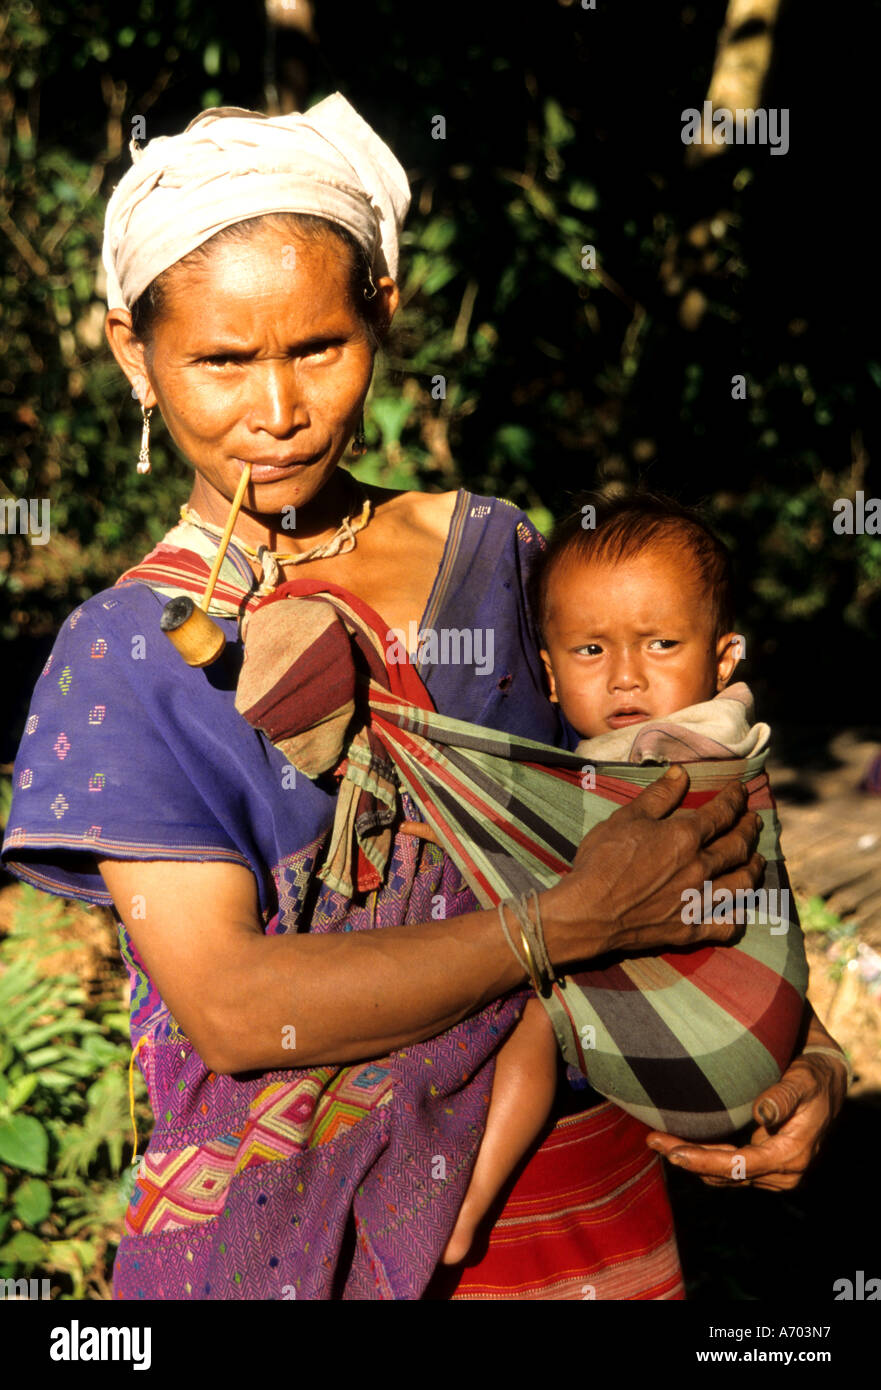 Frau Rohr Baby Thailand Chiang Mai Bergvolk Hill Tribe Drogen Drogen Opium, Stockfoto